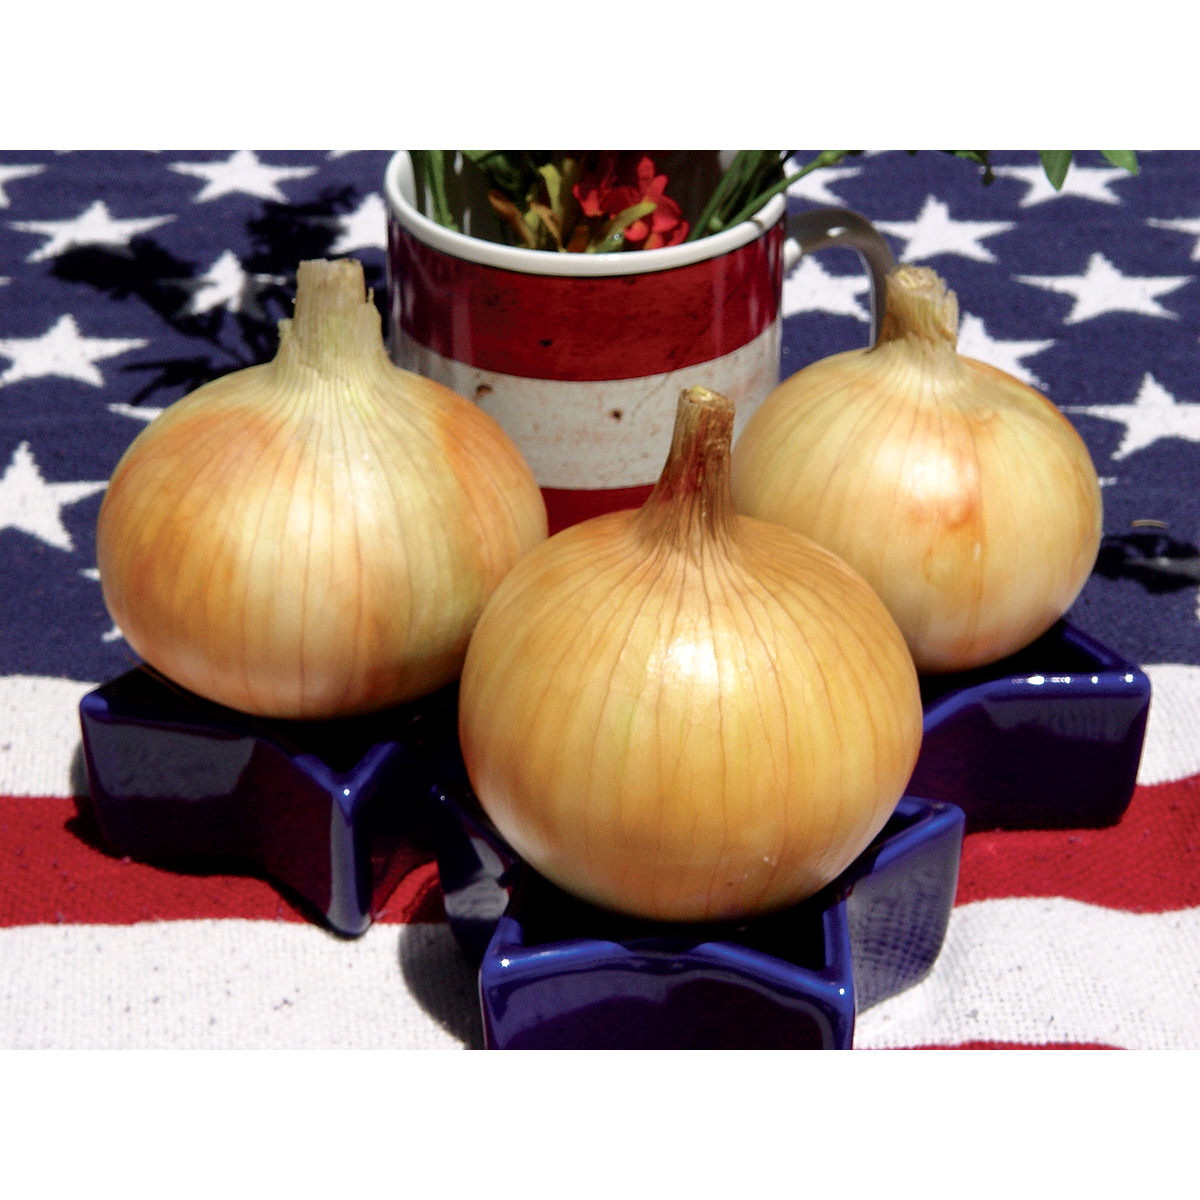 Timon F1 Hybrid Onion Seeds